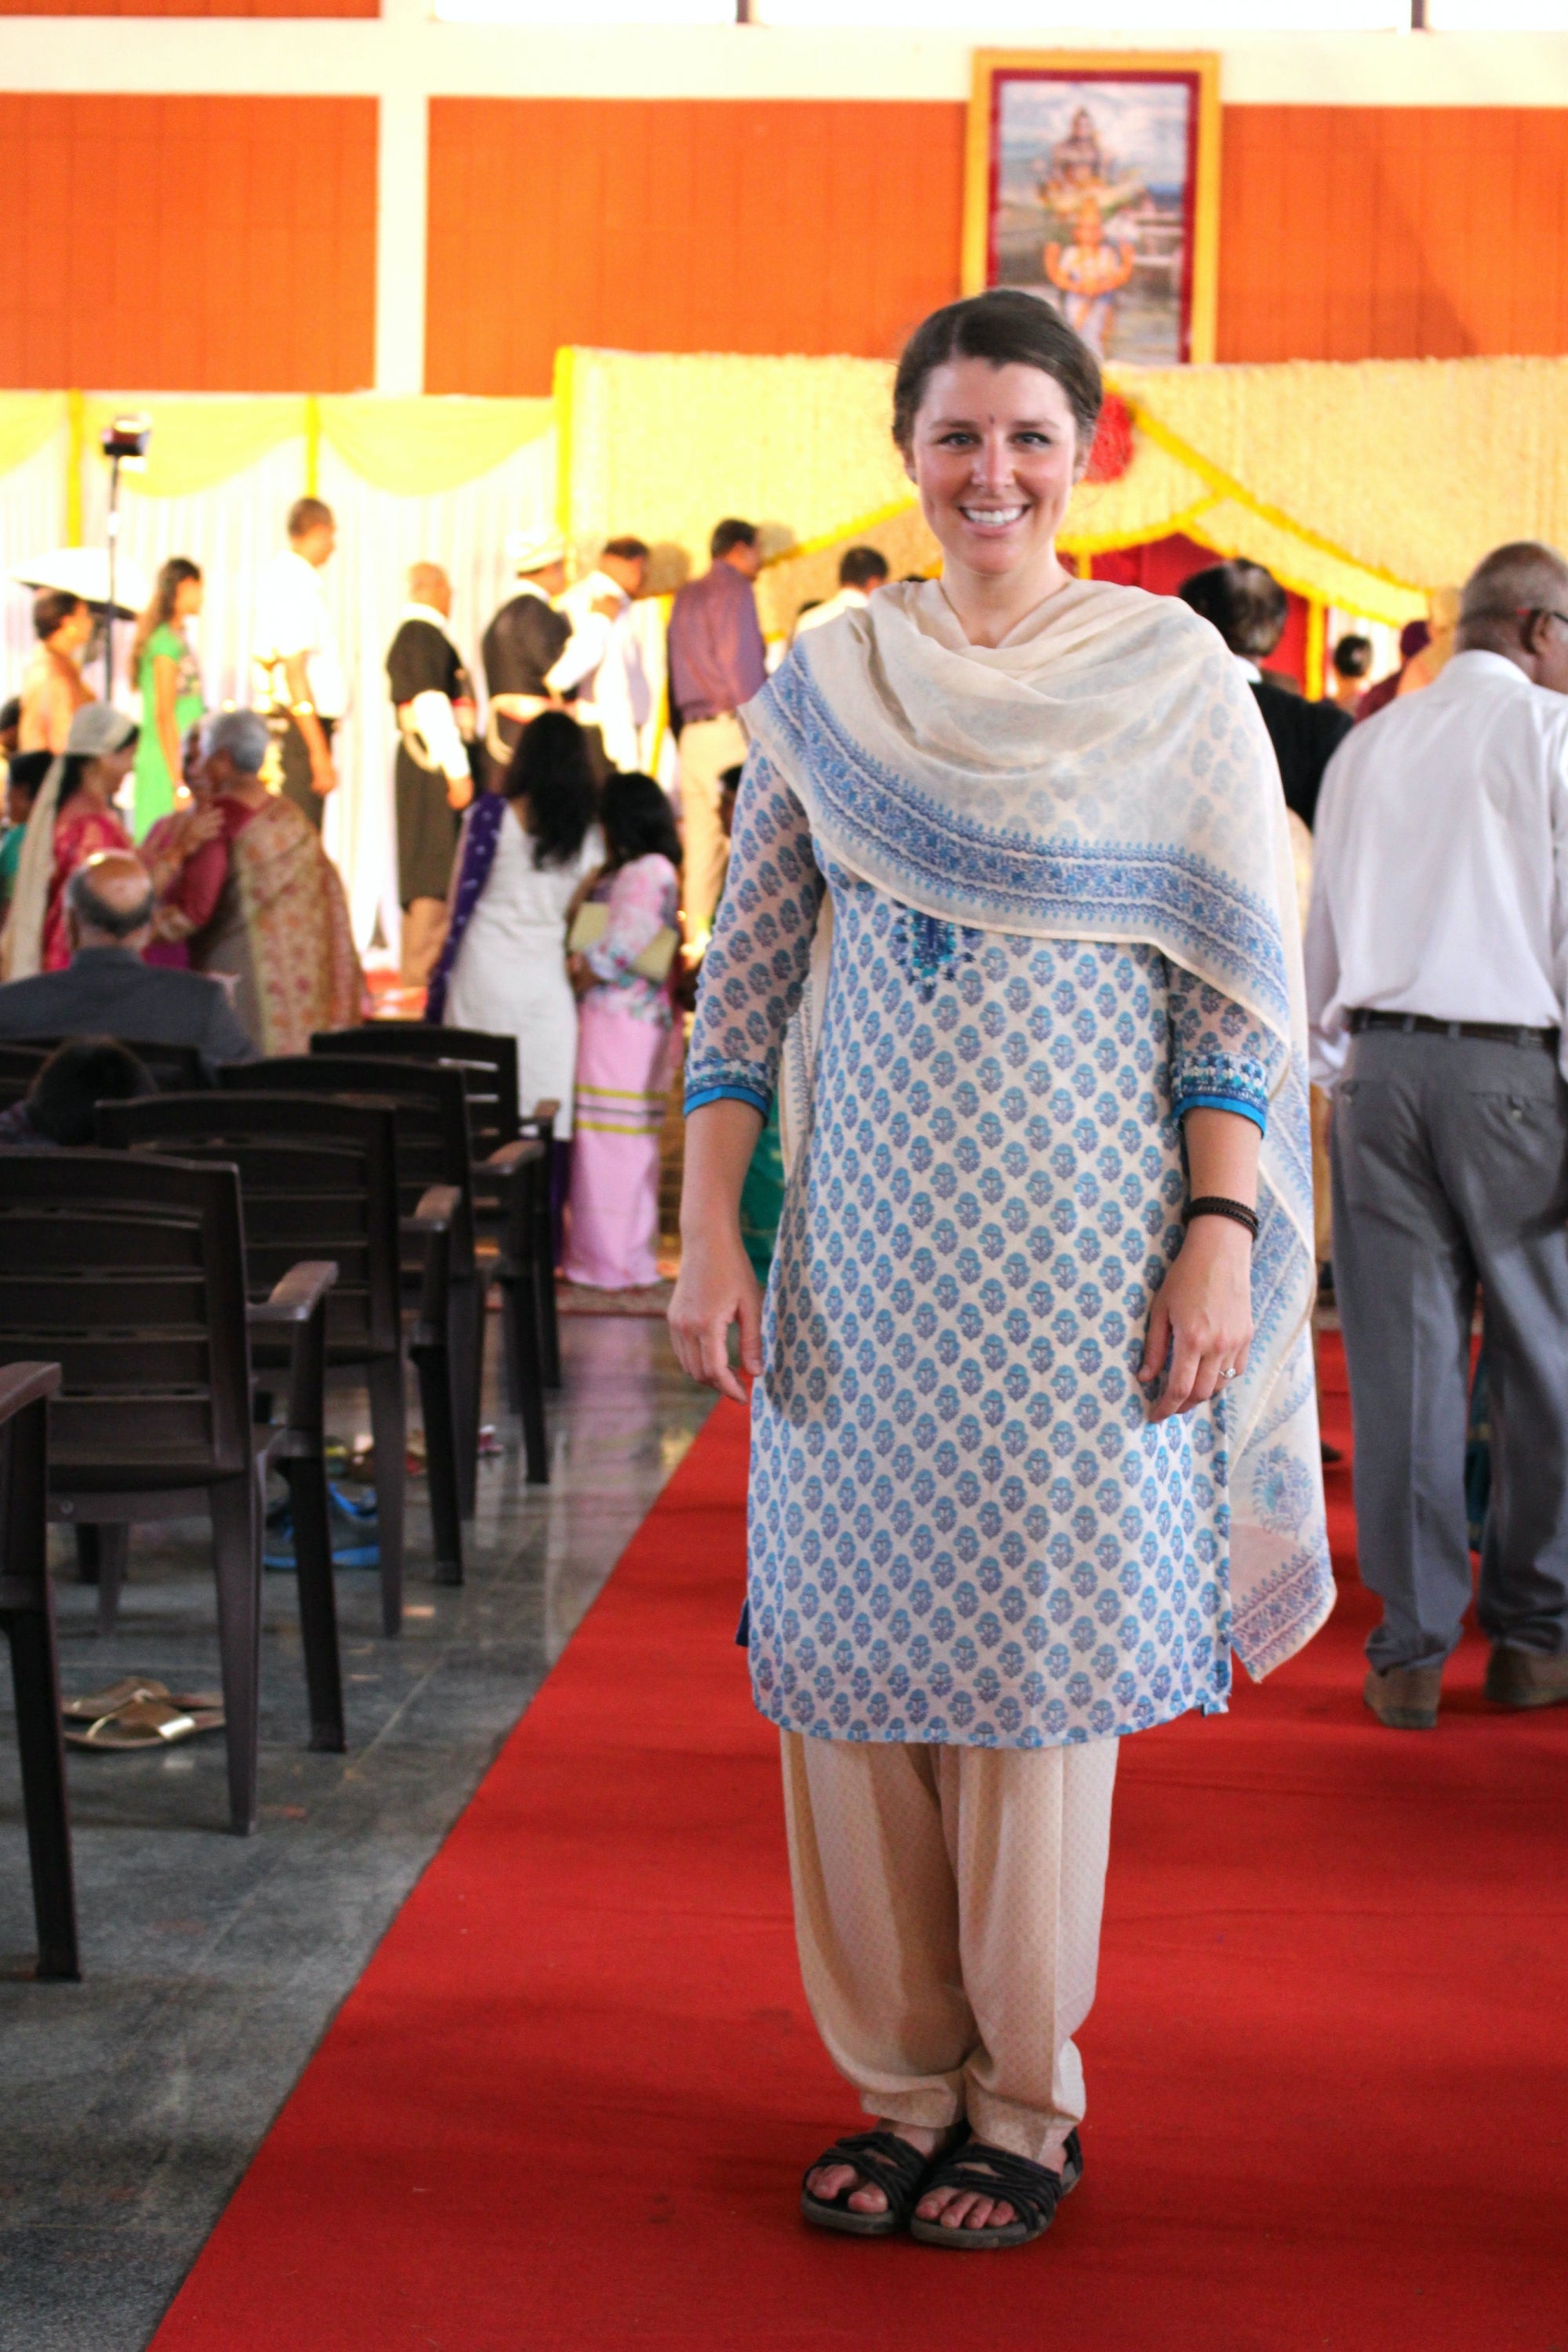 Dani attending a Coorgi wedding dressed in a traditional kurti